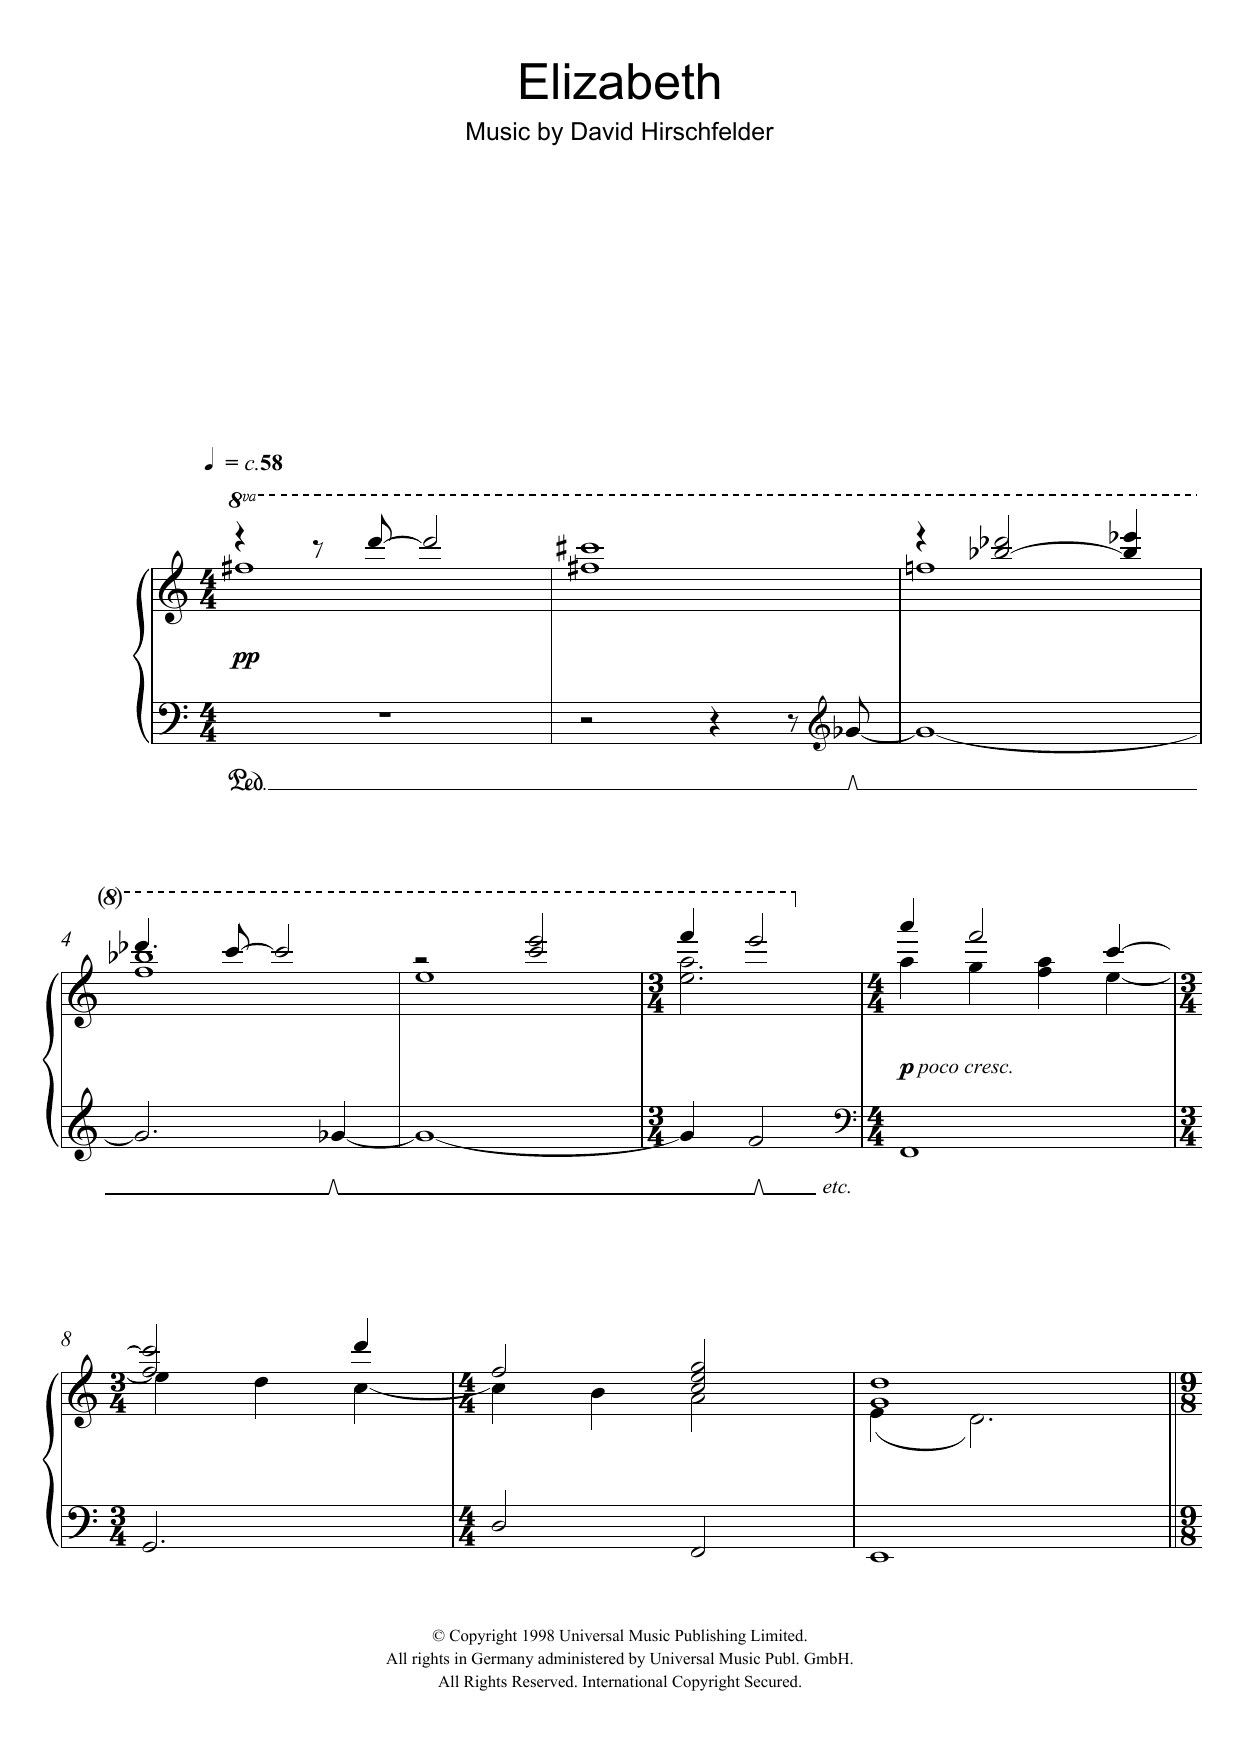 David Hirschfelder Elizabeth (Love Theme) Sheet Music Notes & Chords for Piano - Download or Print PDF